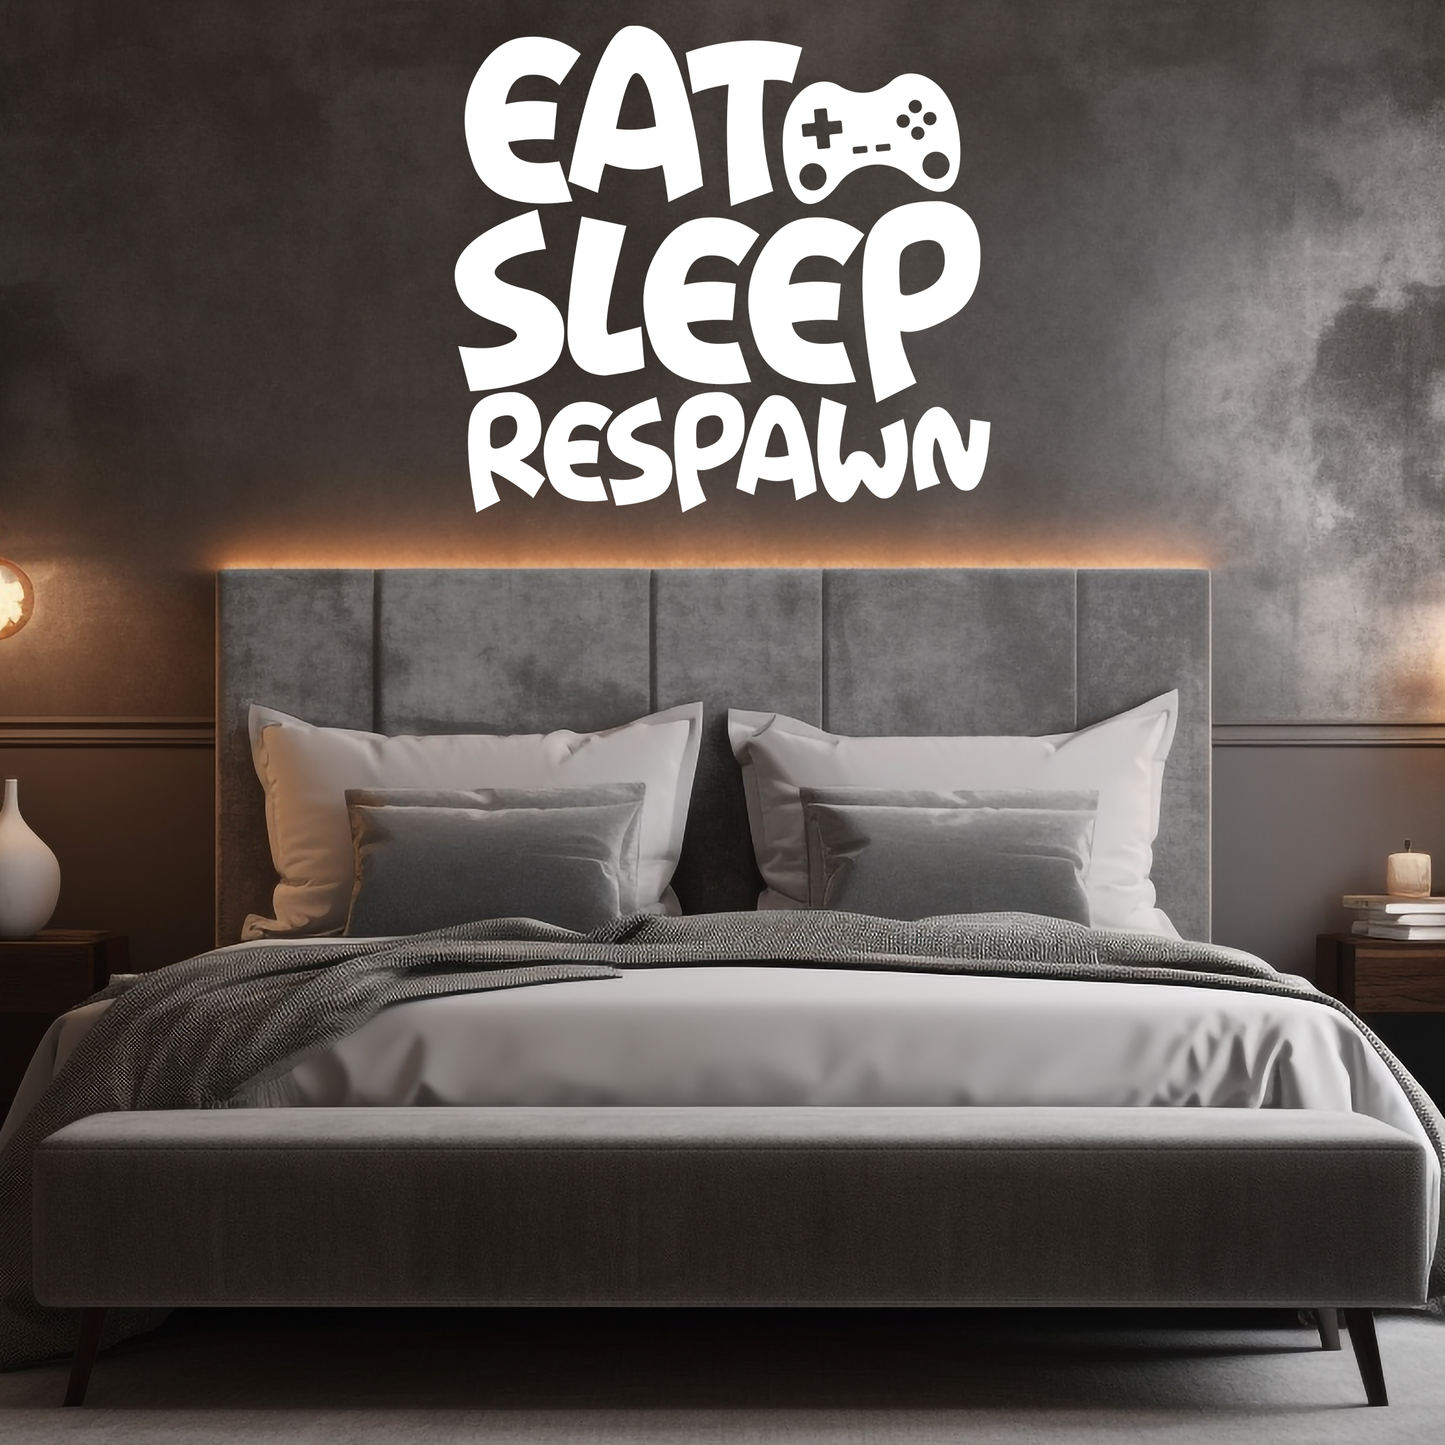 Eat Sleep Respawn Wall Sticker Decal